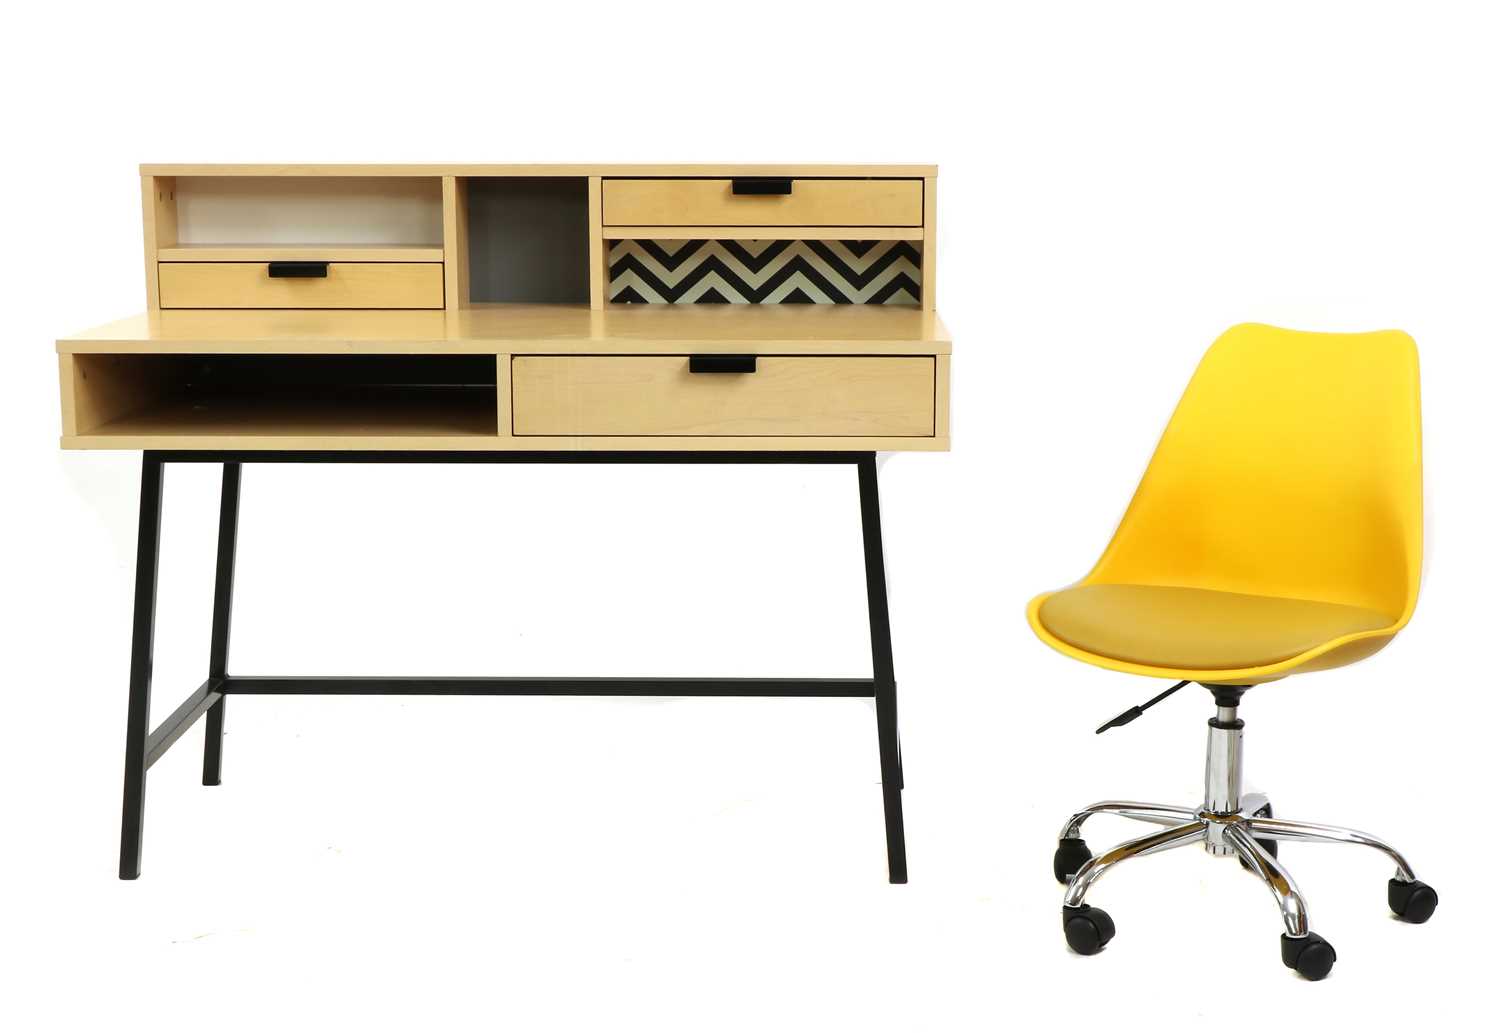 A modern office desk by Maisons du Monde,